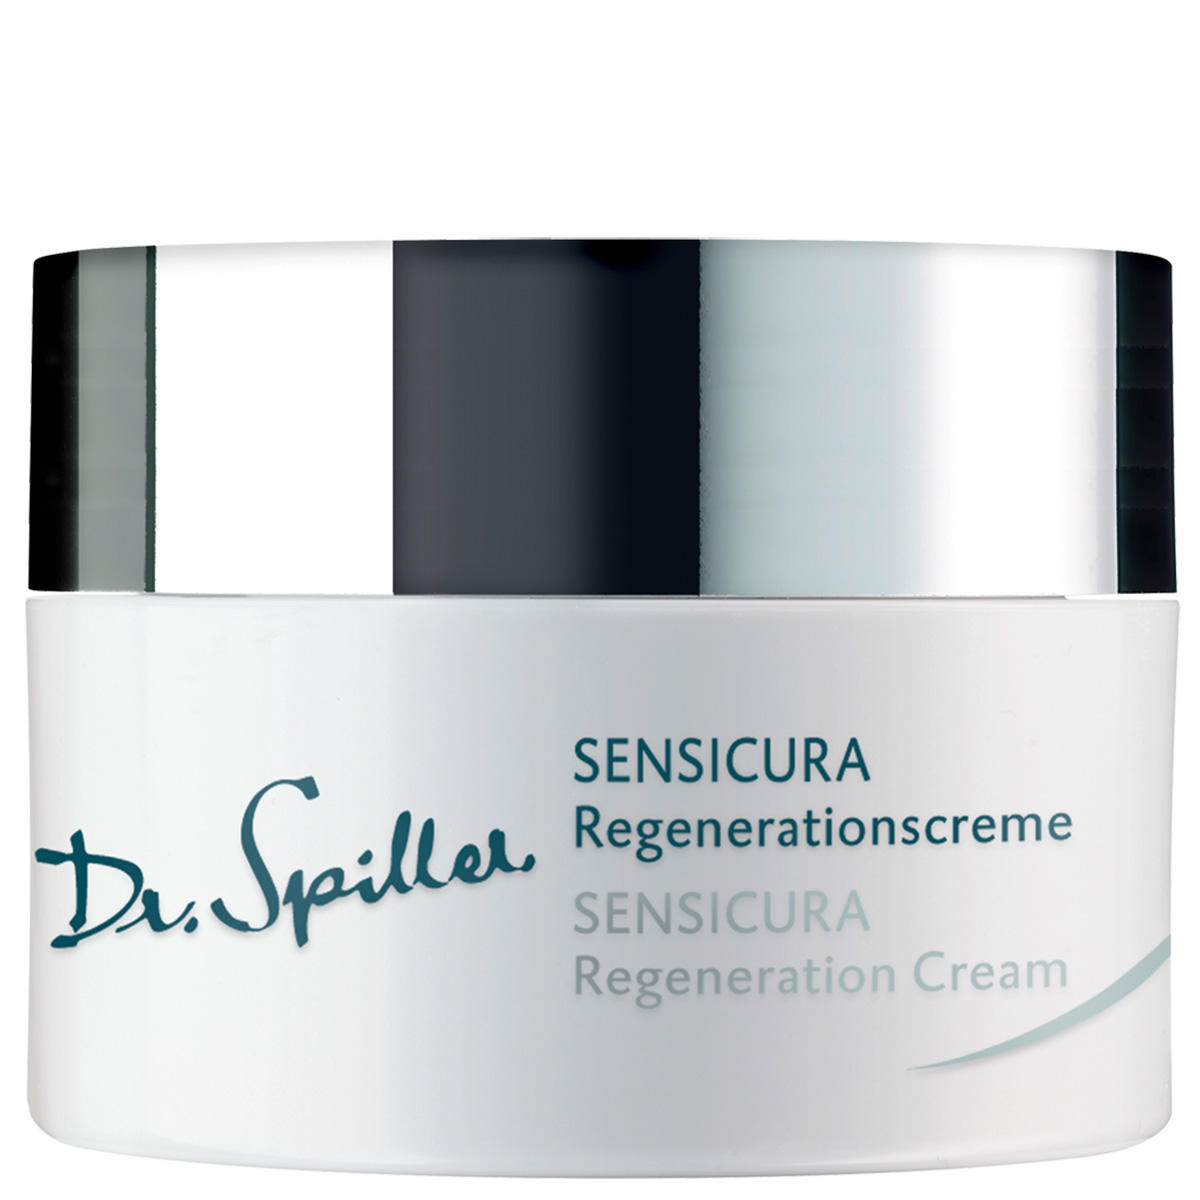 Dr. Spiller Biomimetic SkinCare SENSICURA Regenerationscreme 50 ml - 1